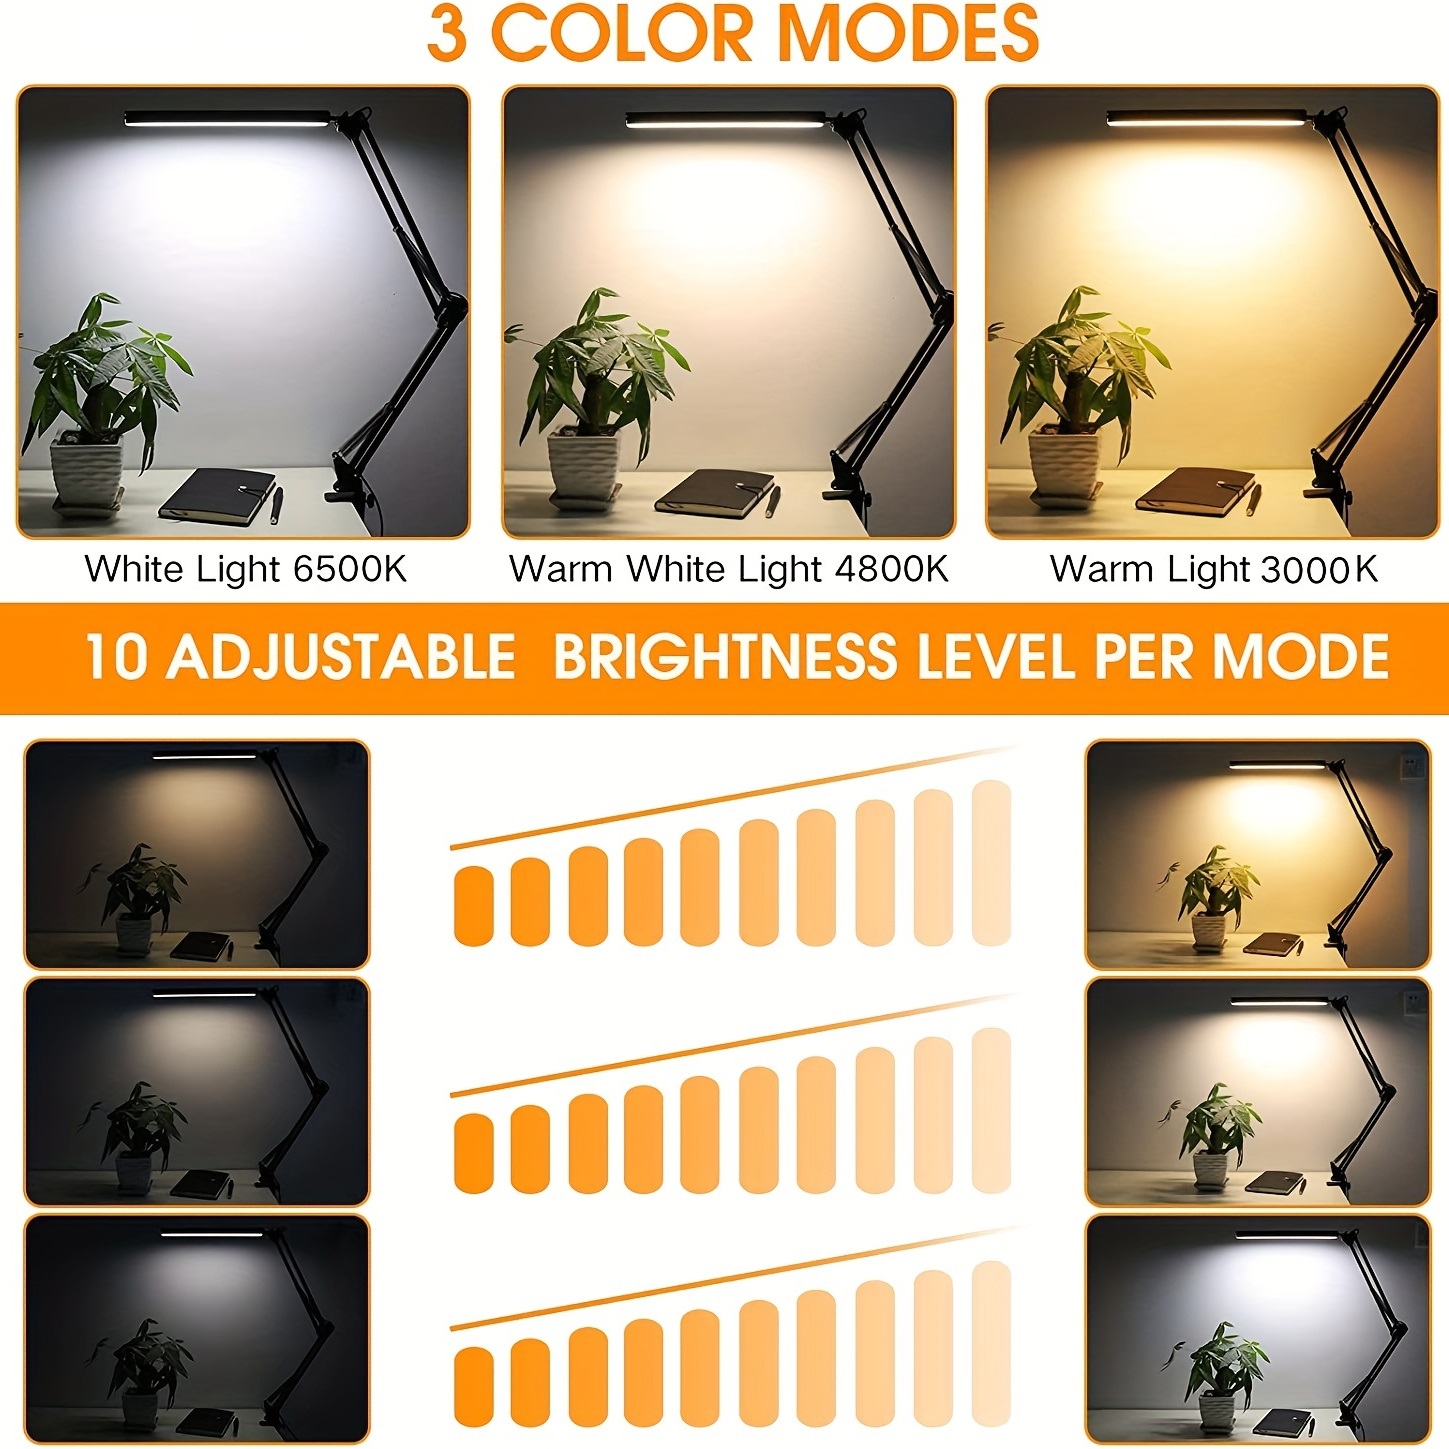 LED-Desk-Lights-Upgrade-18W-LED-Desk-Lamp-Longer-Swing-Arm-Table-Lamp-with-Clamp-Eye-Caring-Architect-Desk-Light-Dimmable-Lamp-with-3-Color-Modes-10-Brightness-Levels-14